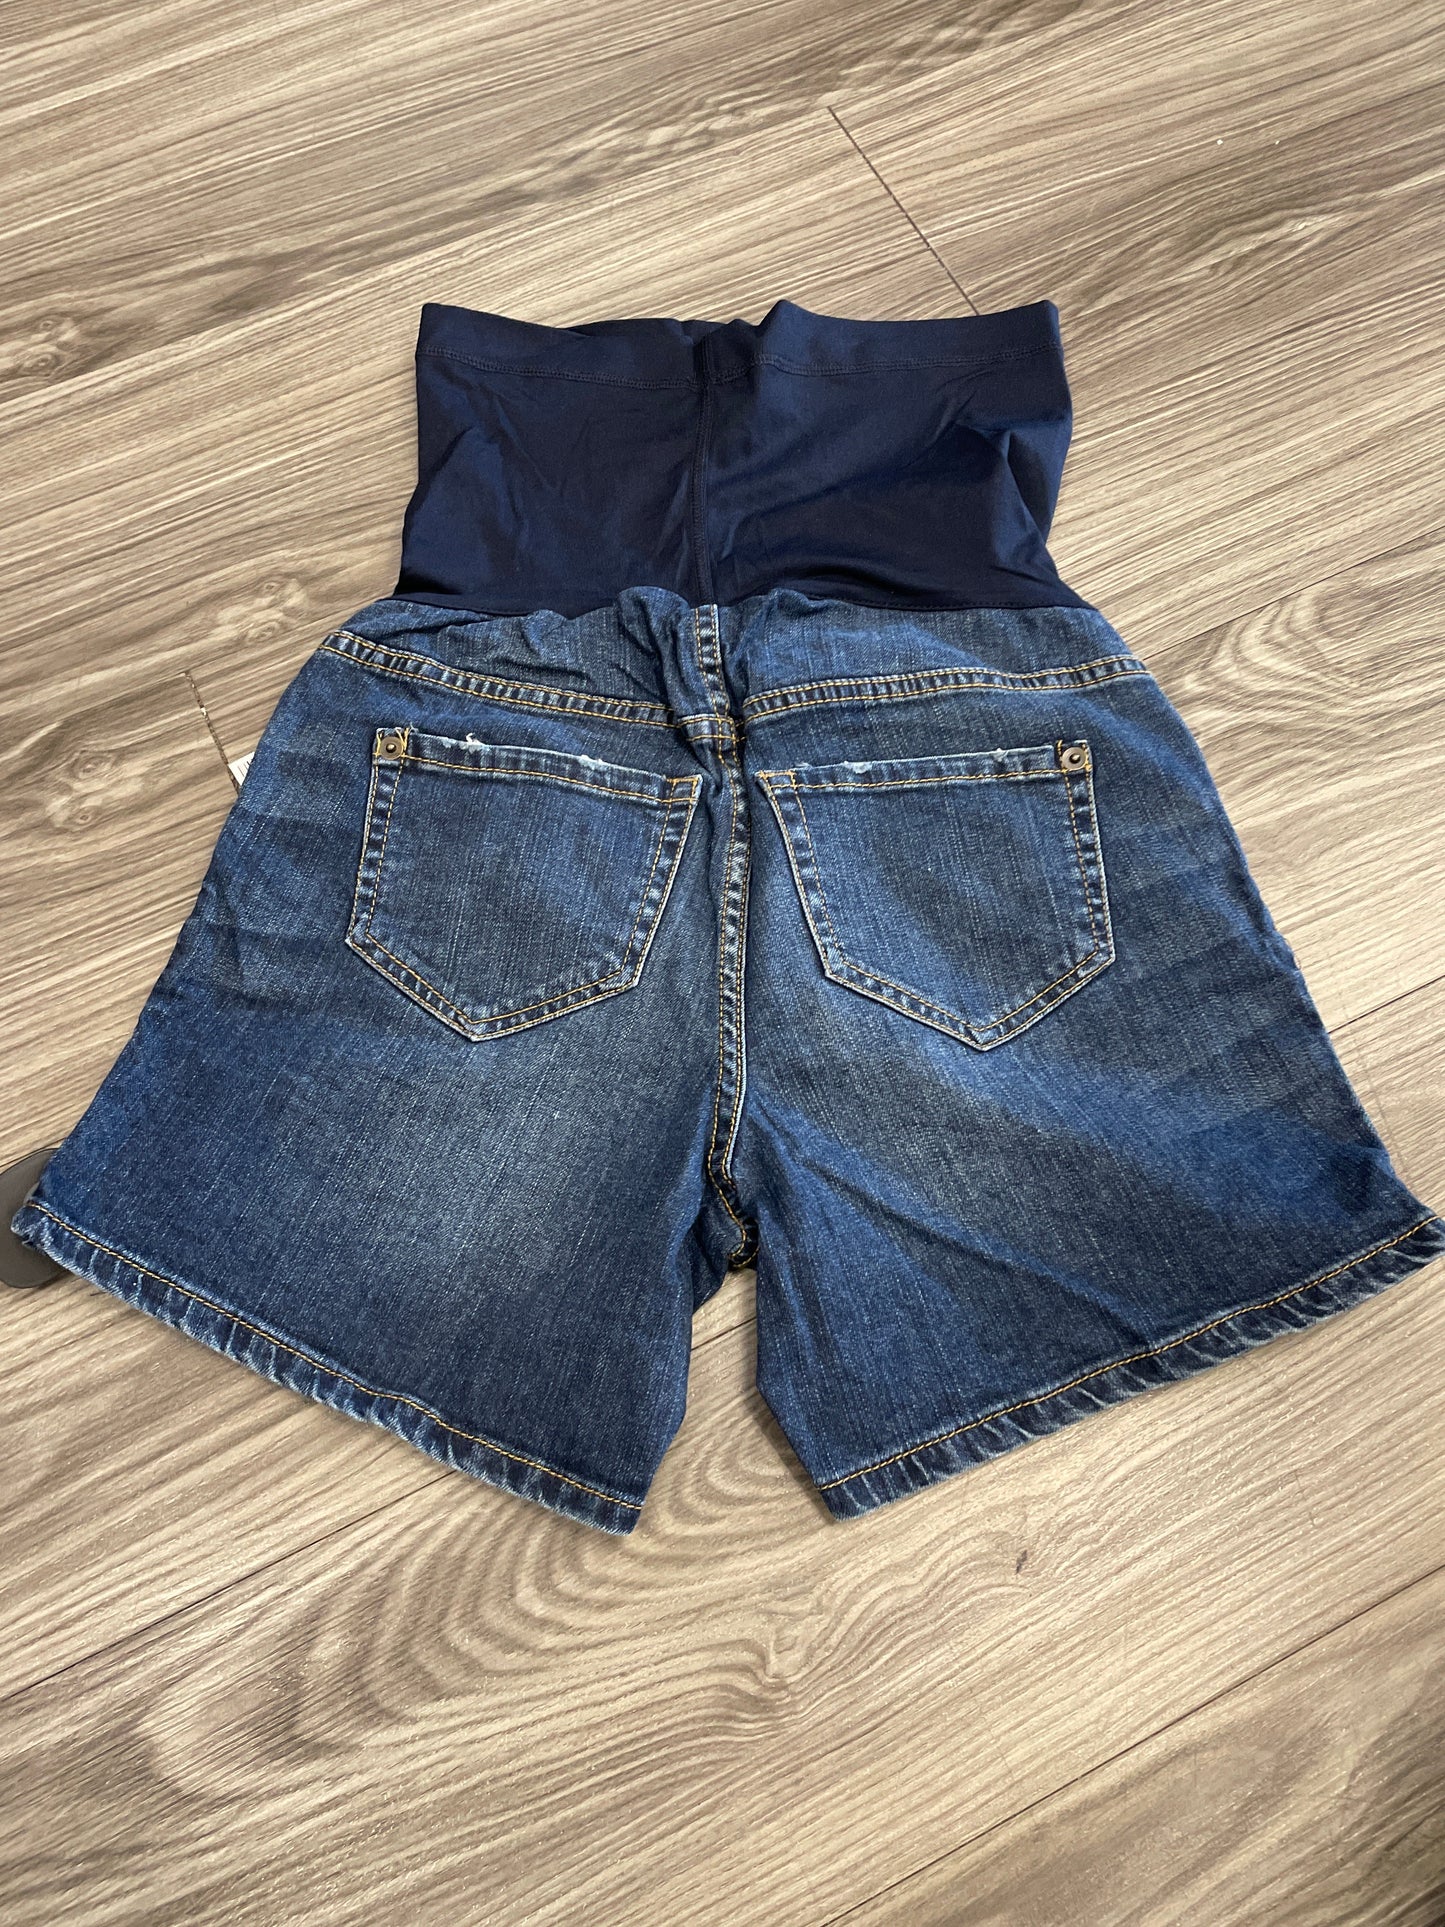 Maternity Shorts By Liz Lange  Size: Xs